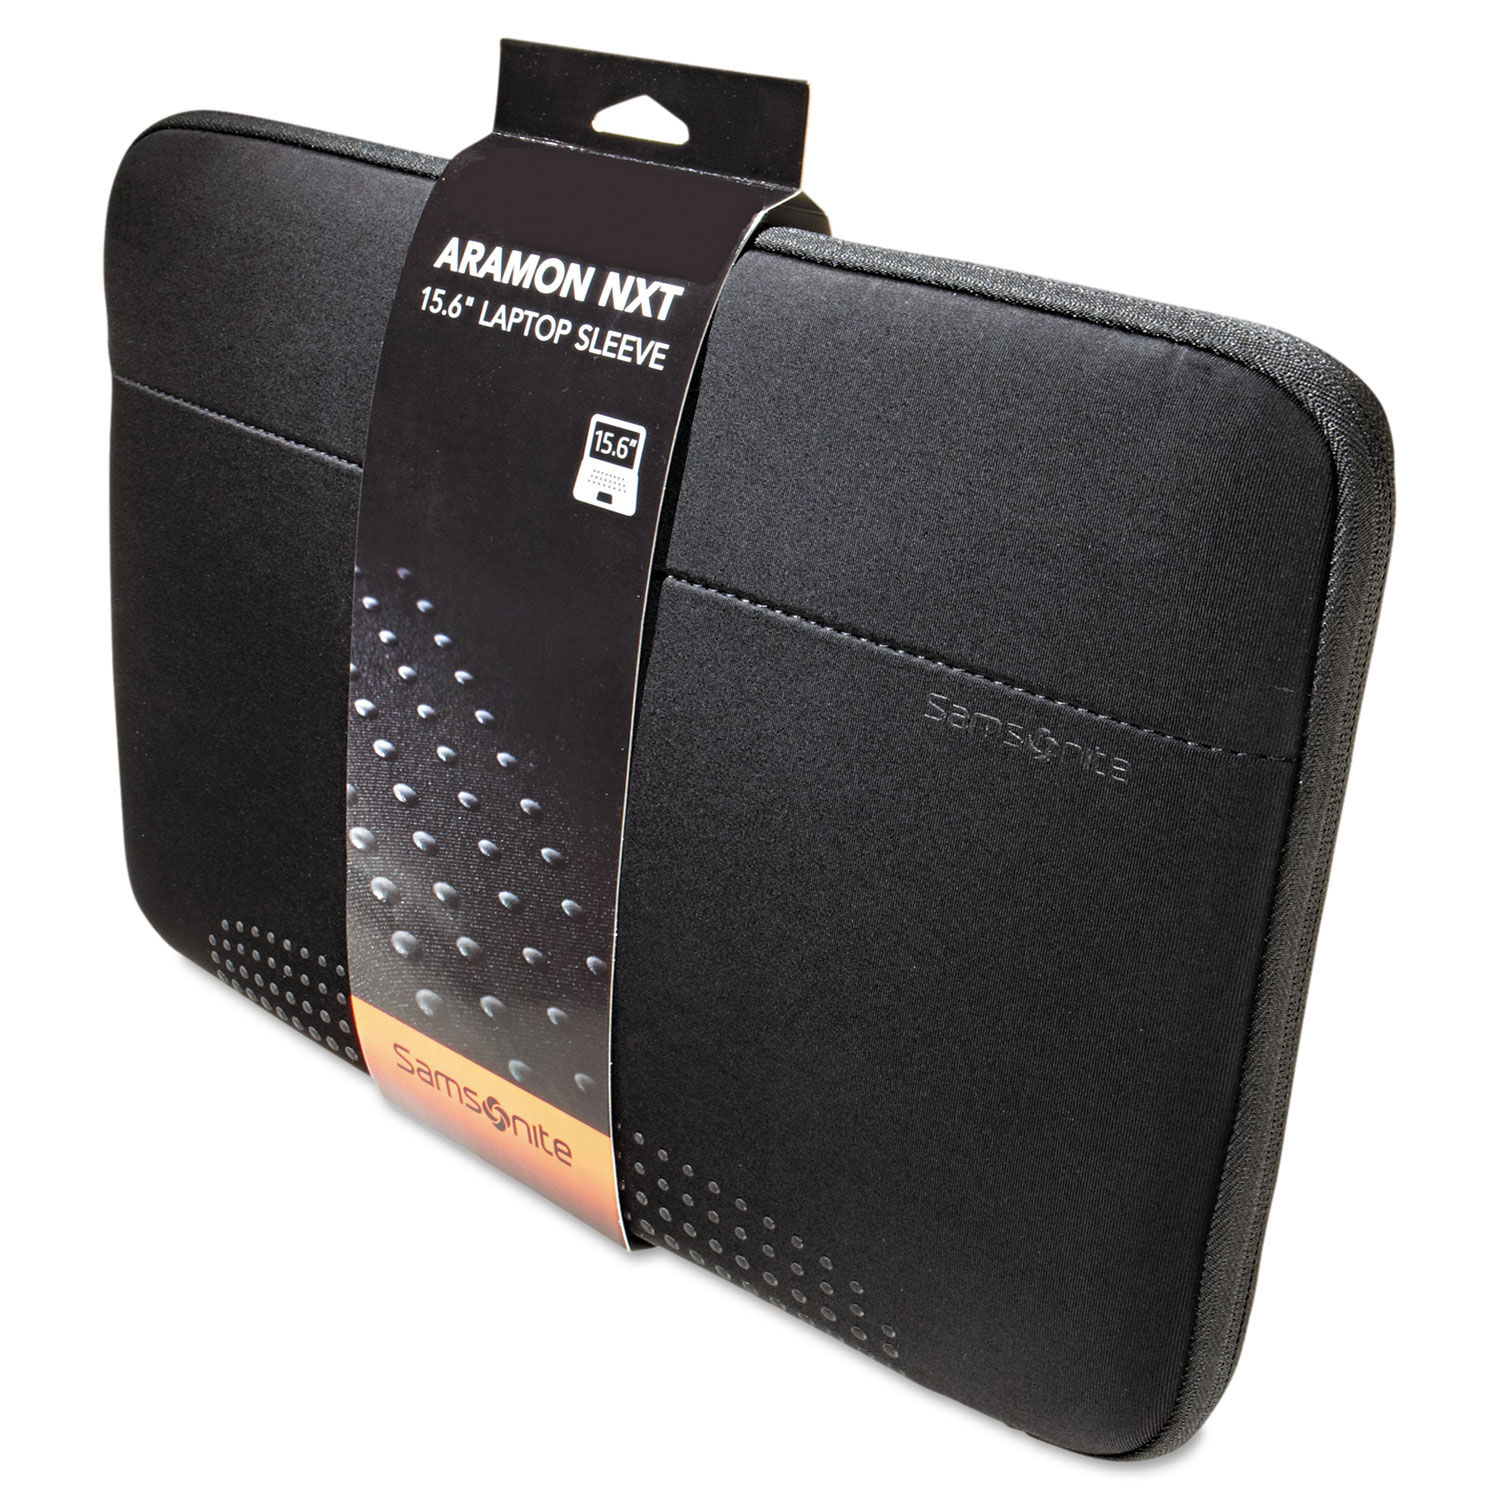 Aramon 2 14 Laptop Sleeve Black 64005-1041 